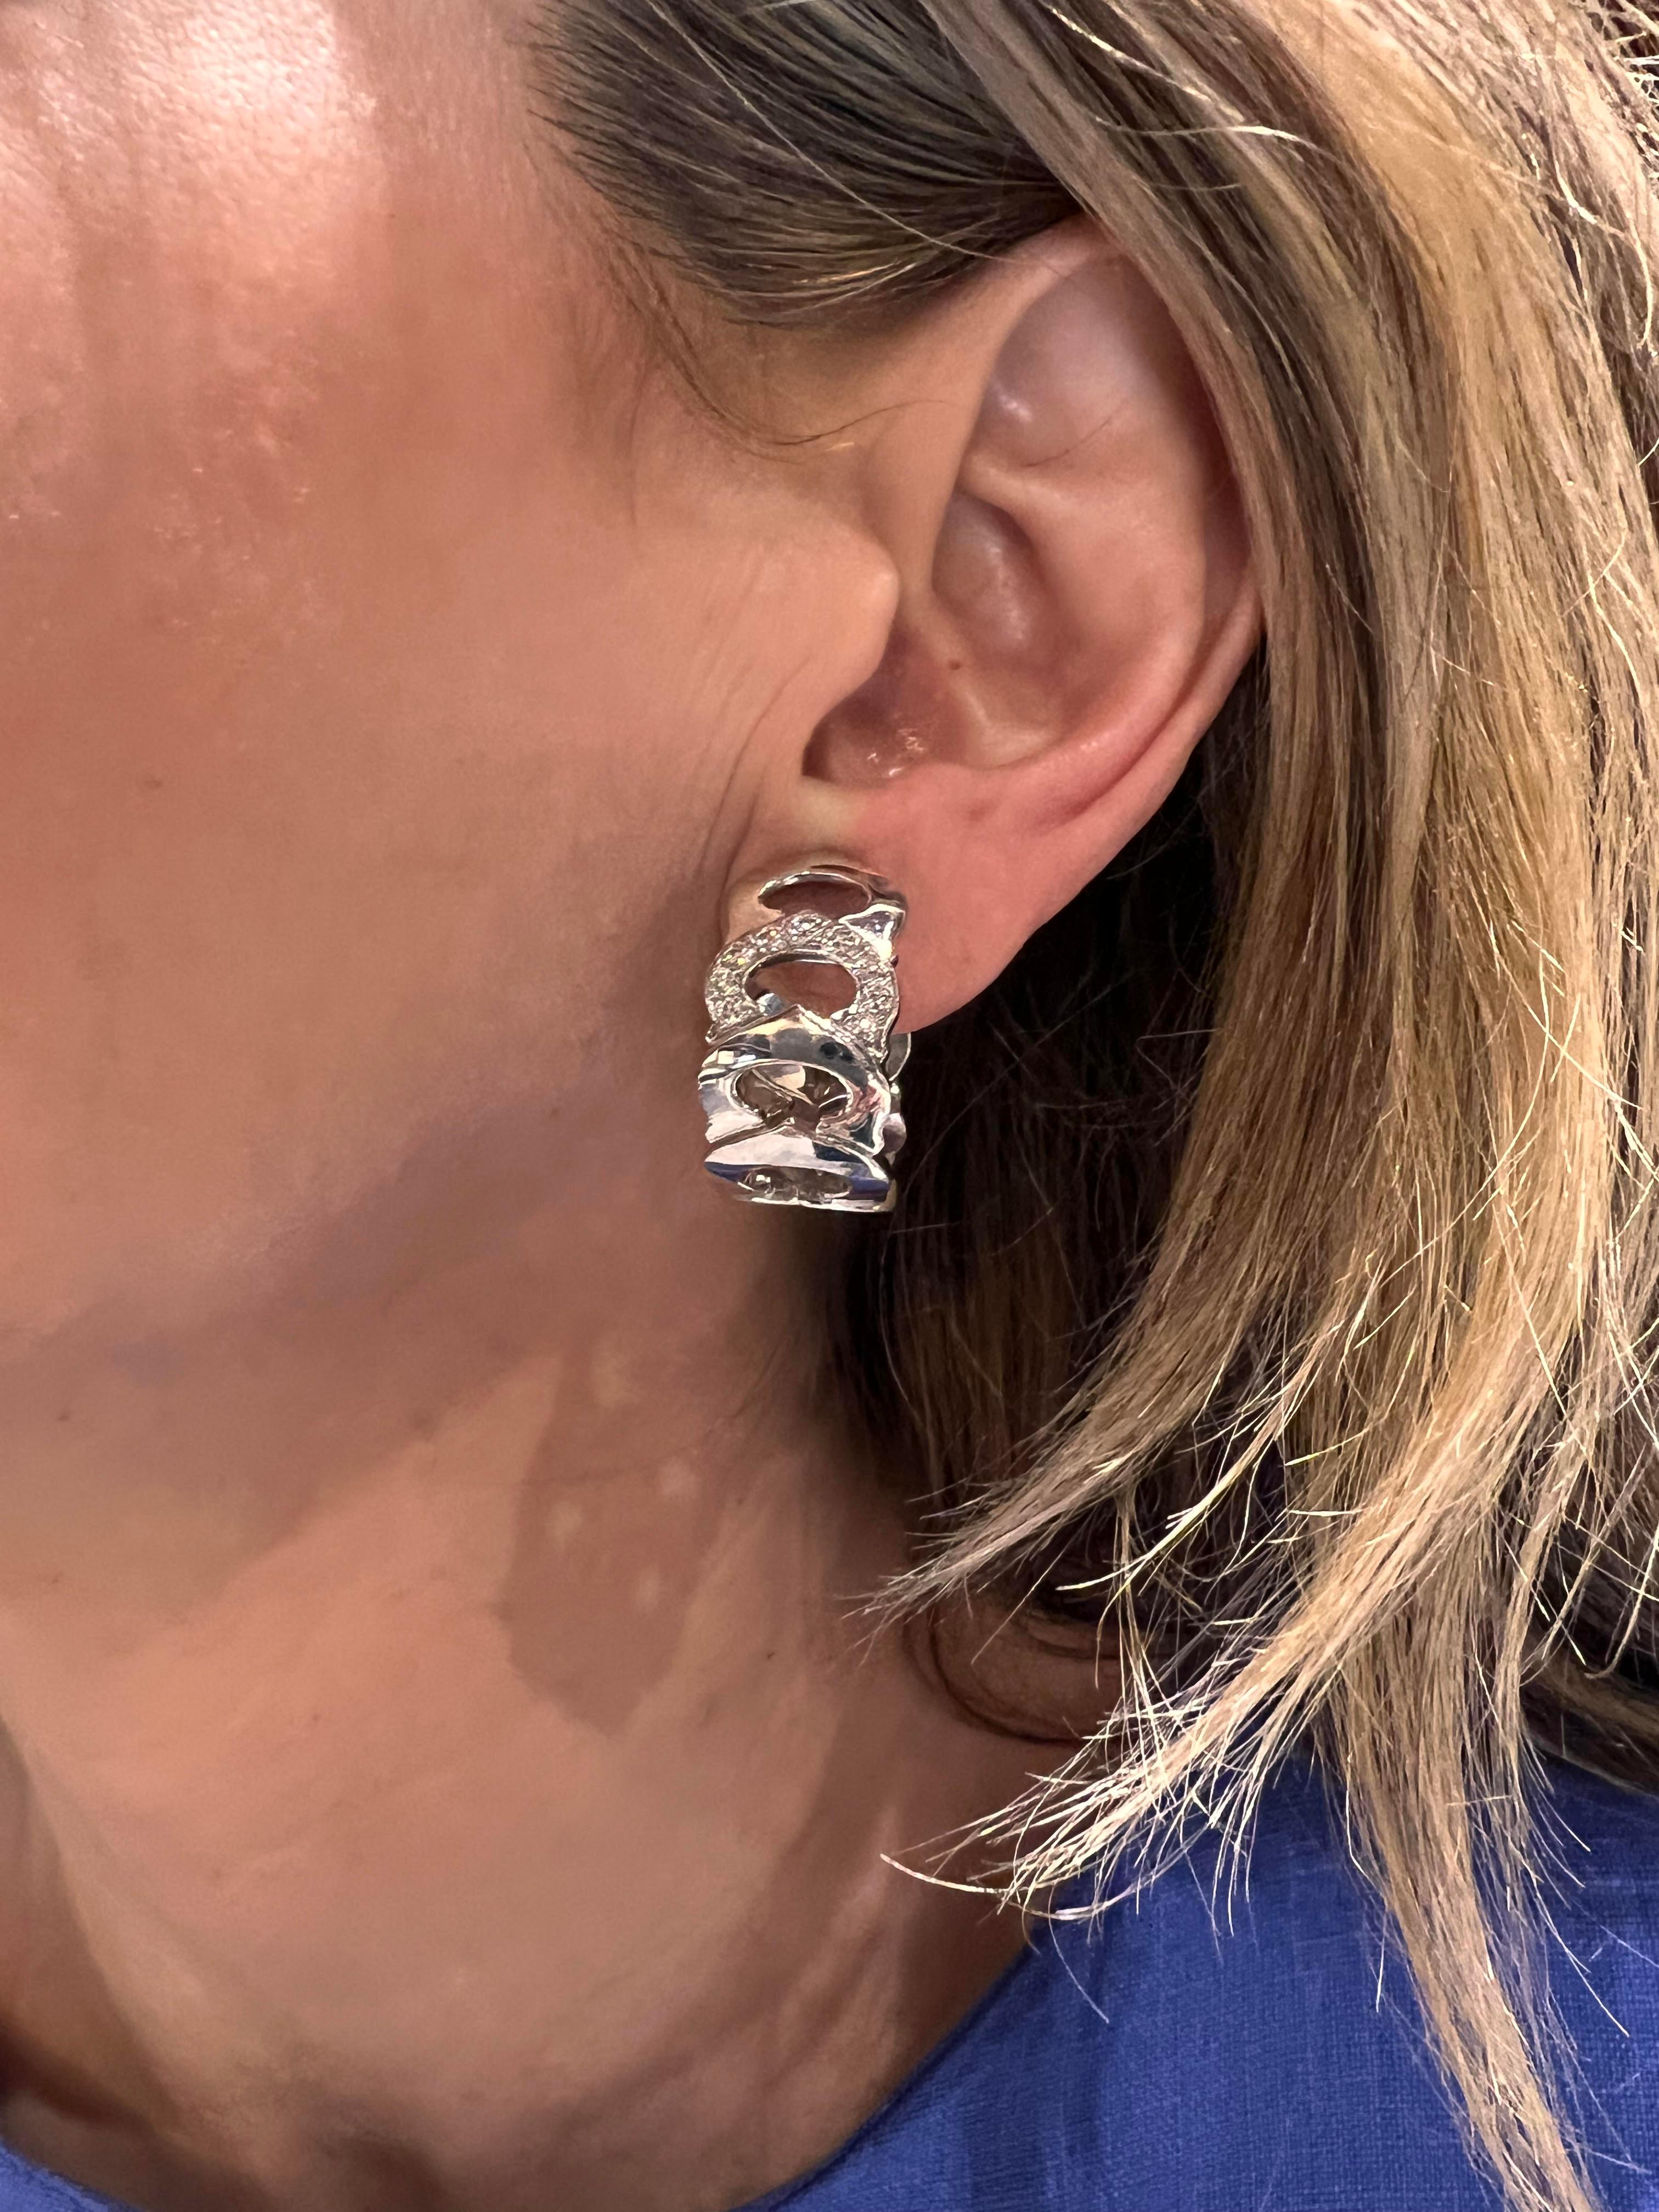 replica cartier diamond earrings pink gold